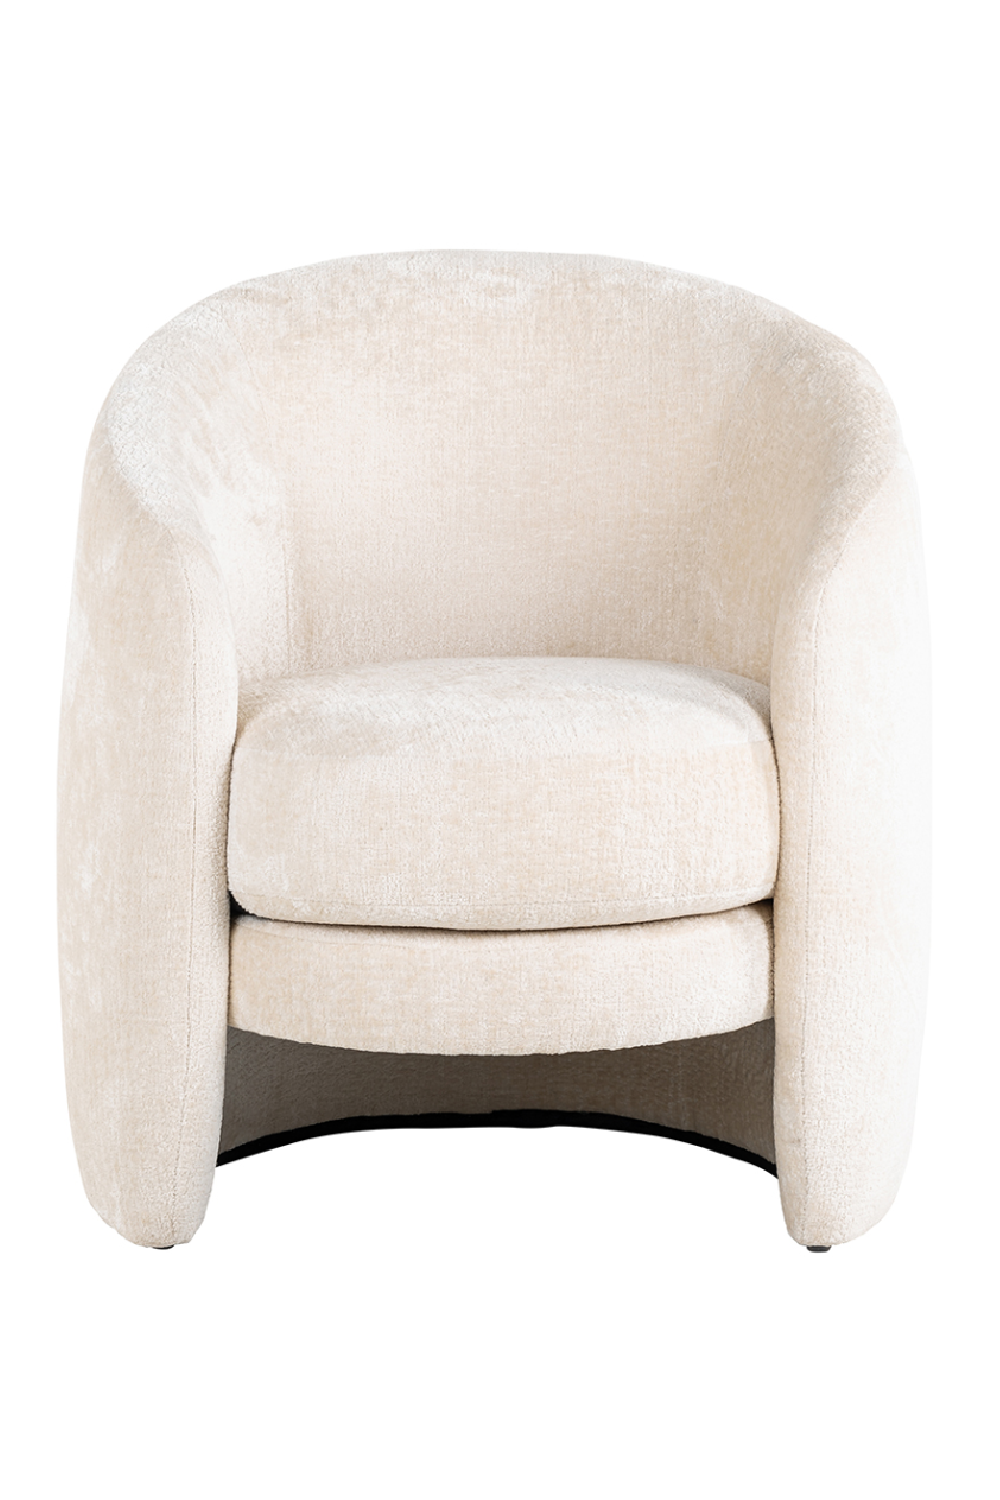 Chenille Upholstered Accent Armchair | OROA Fenna | Oroa.com